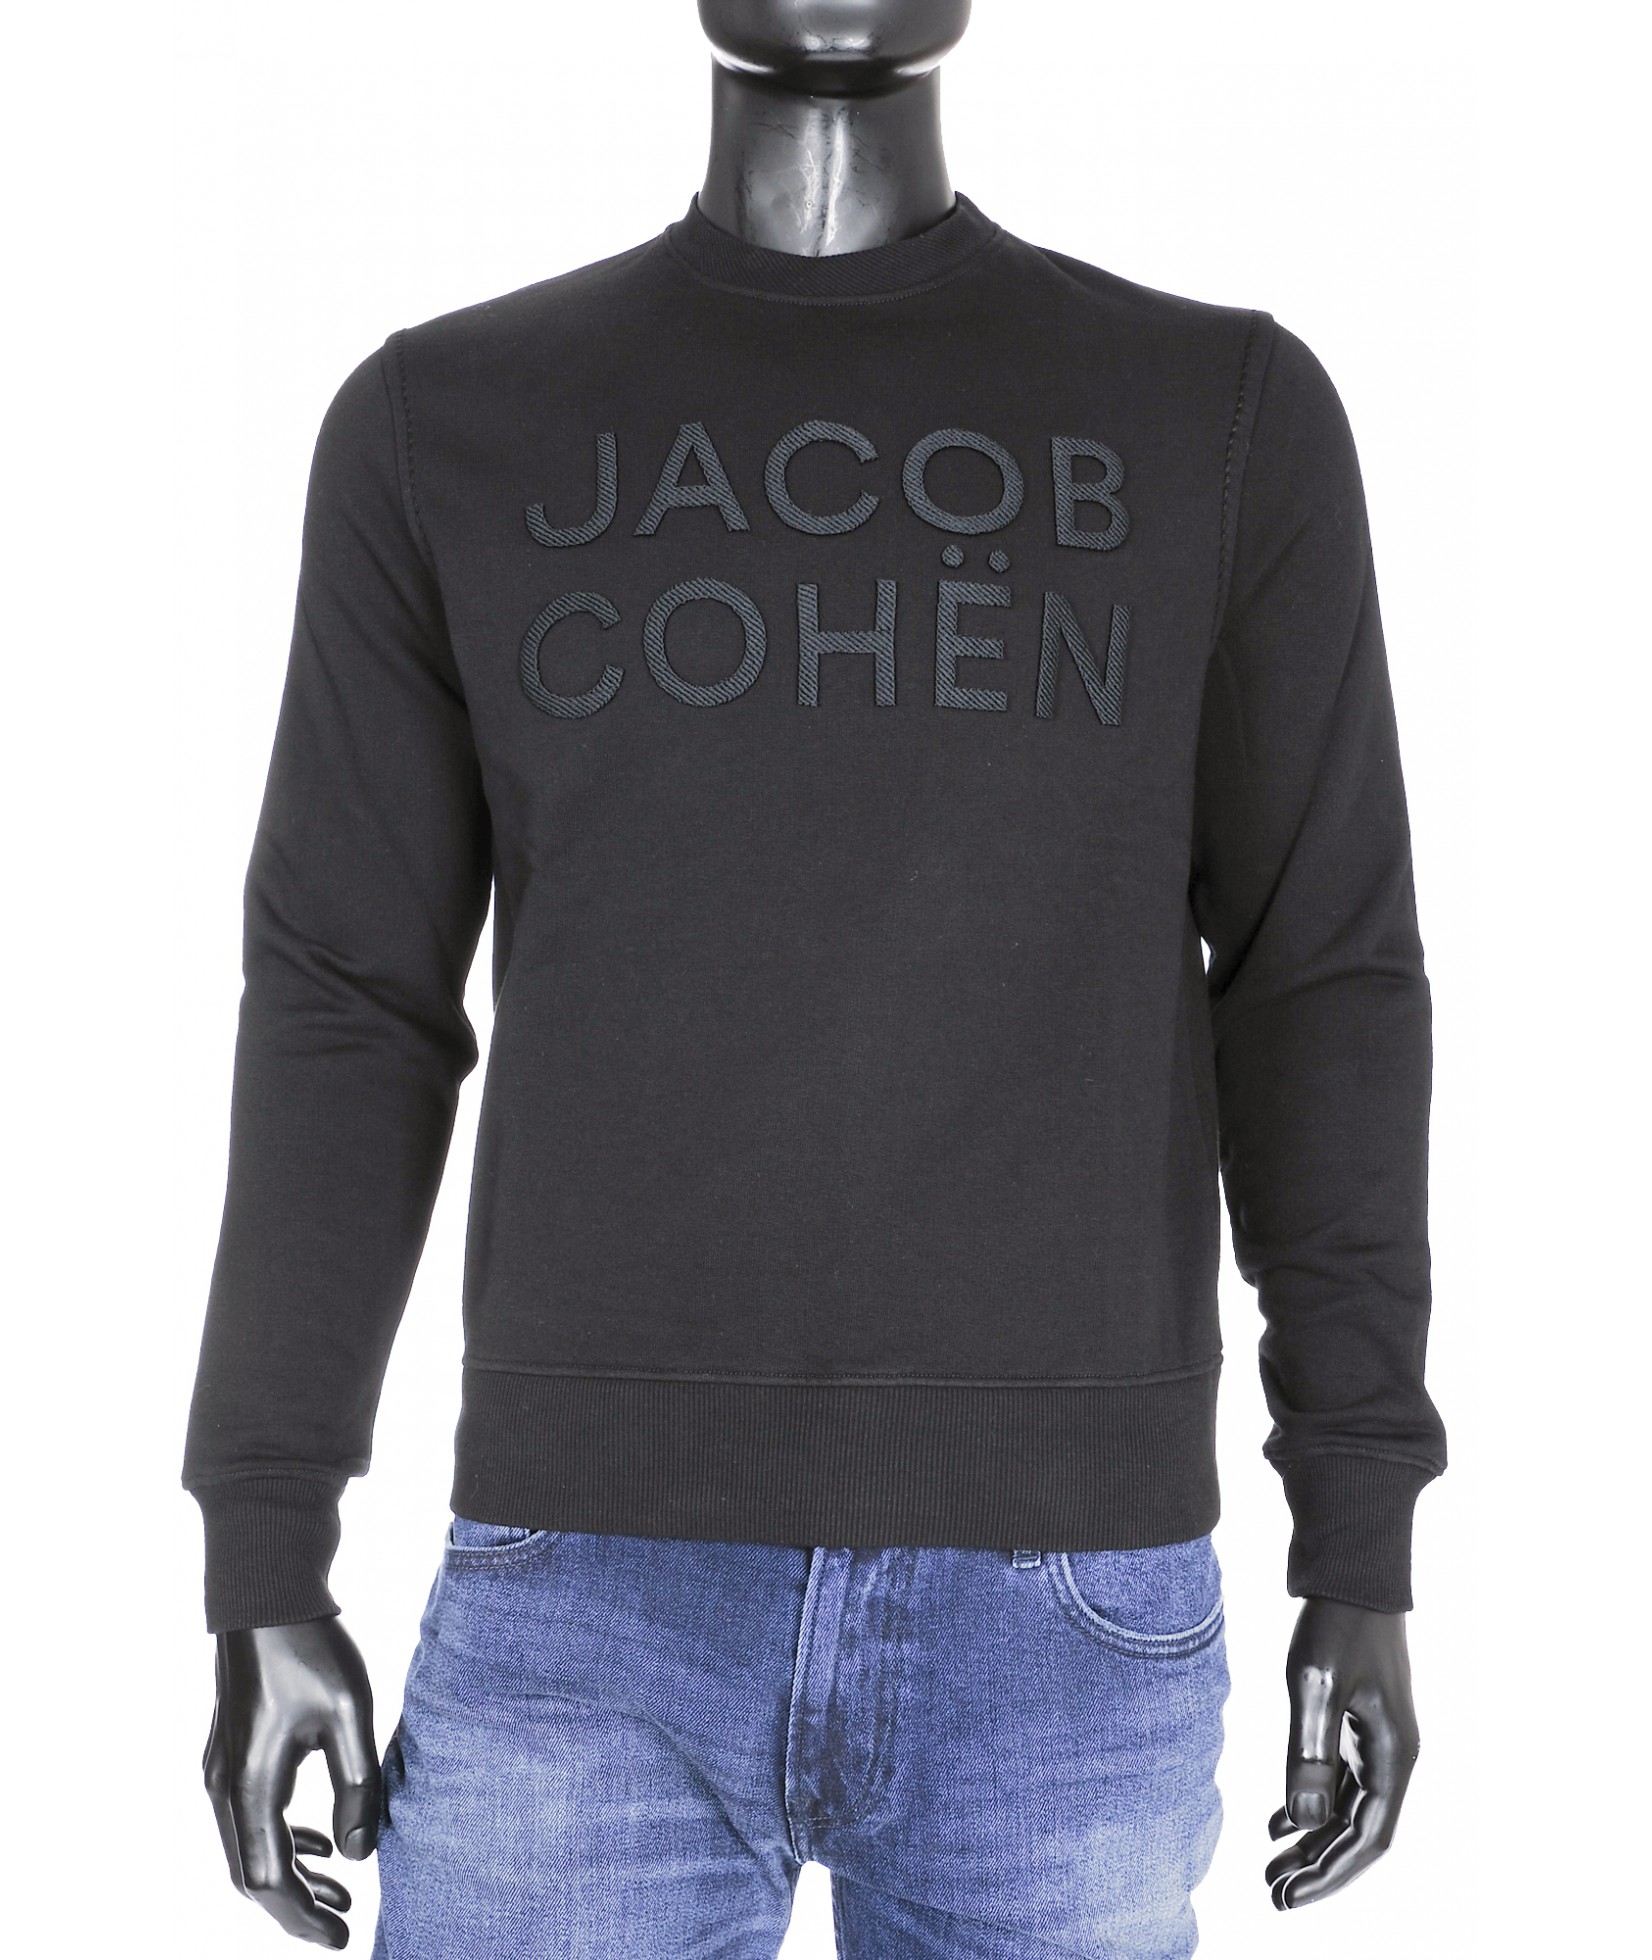 Jacob Cohen Sweater Black (33200)